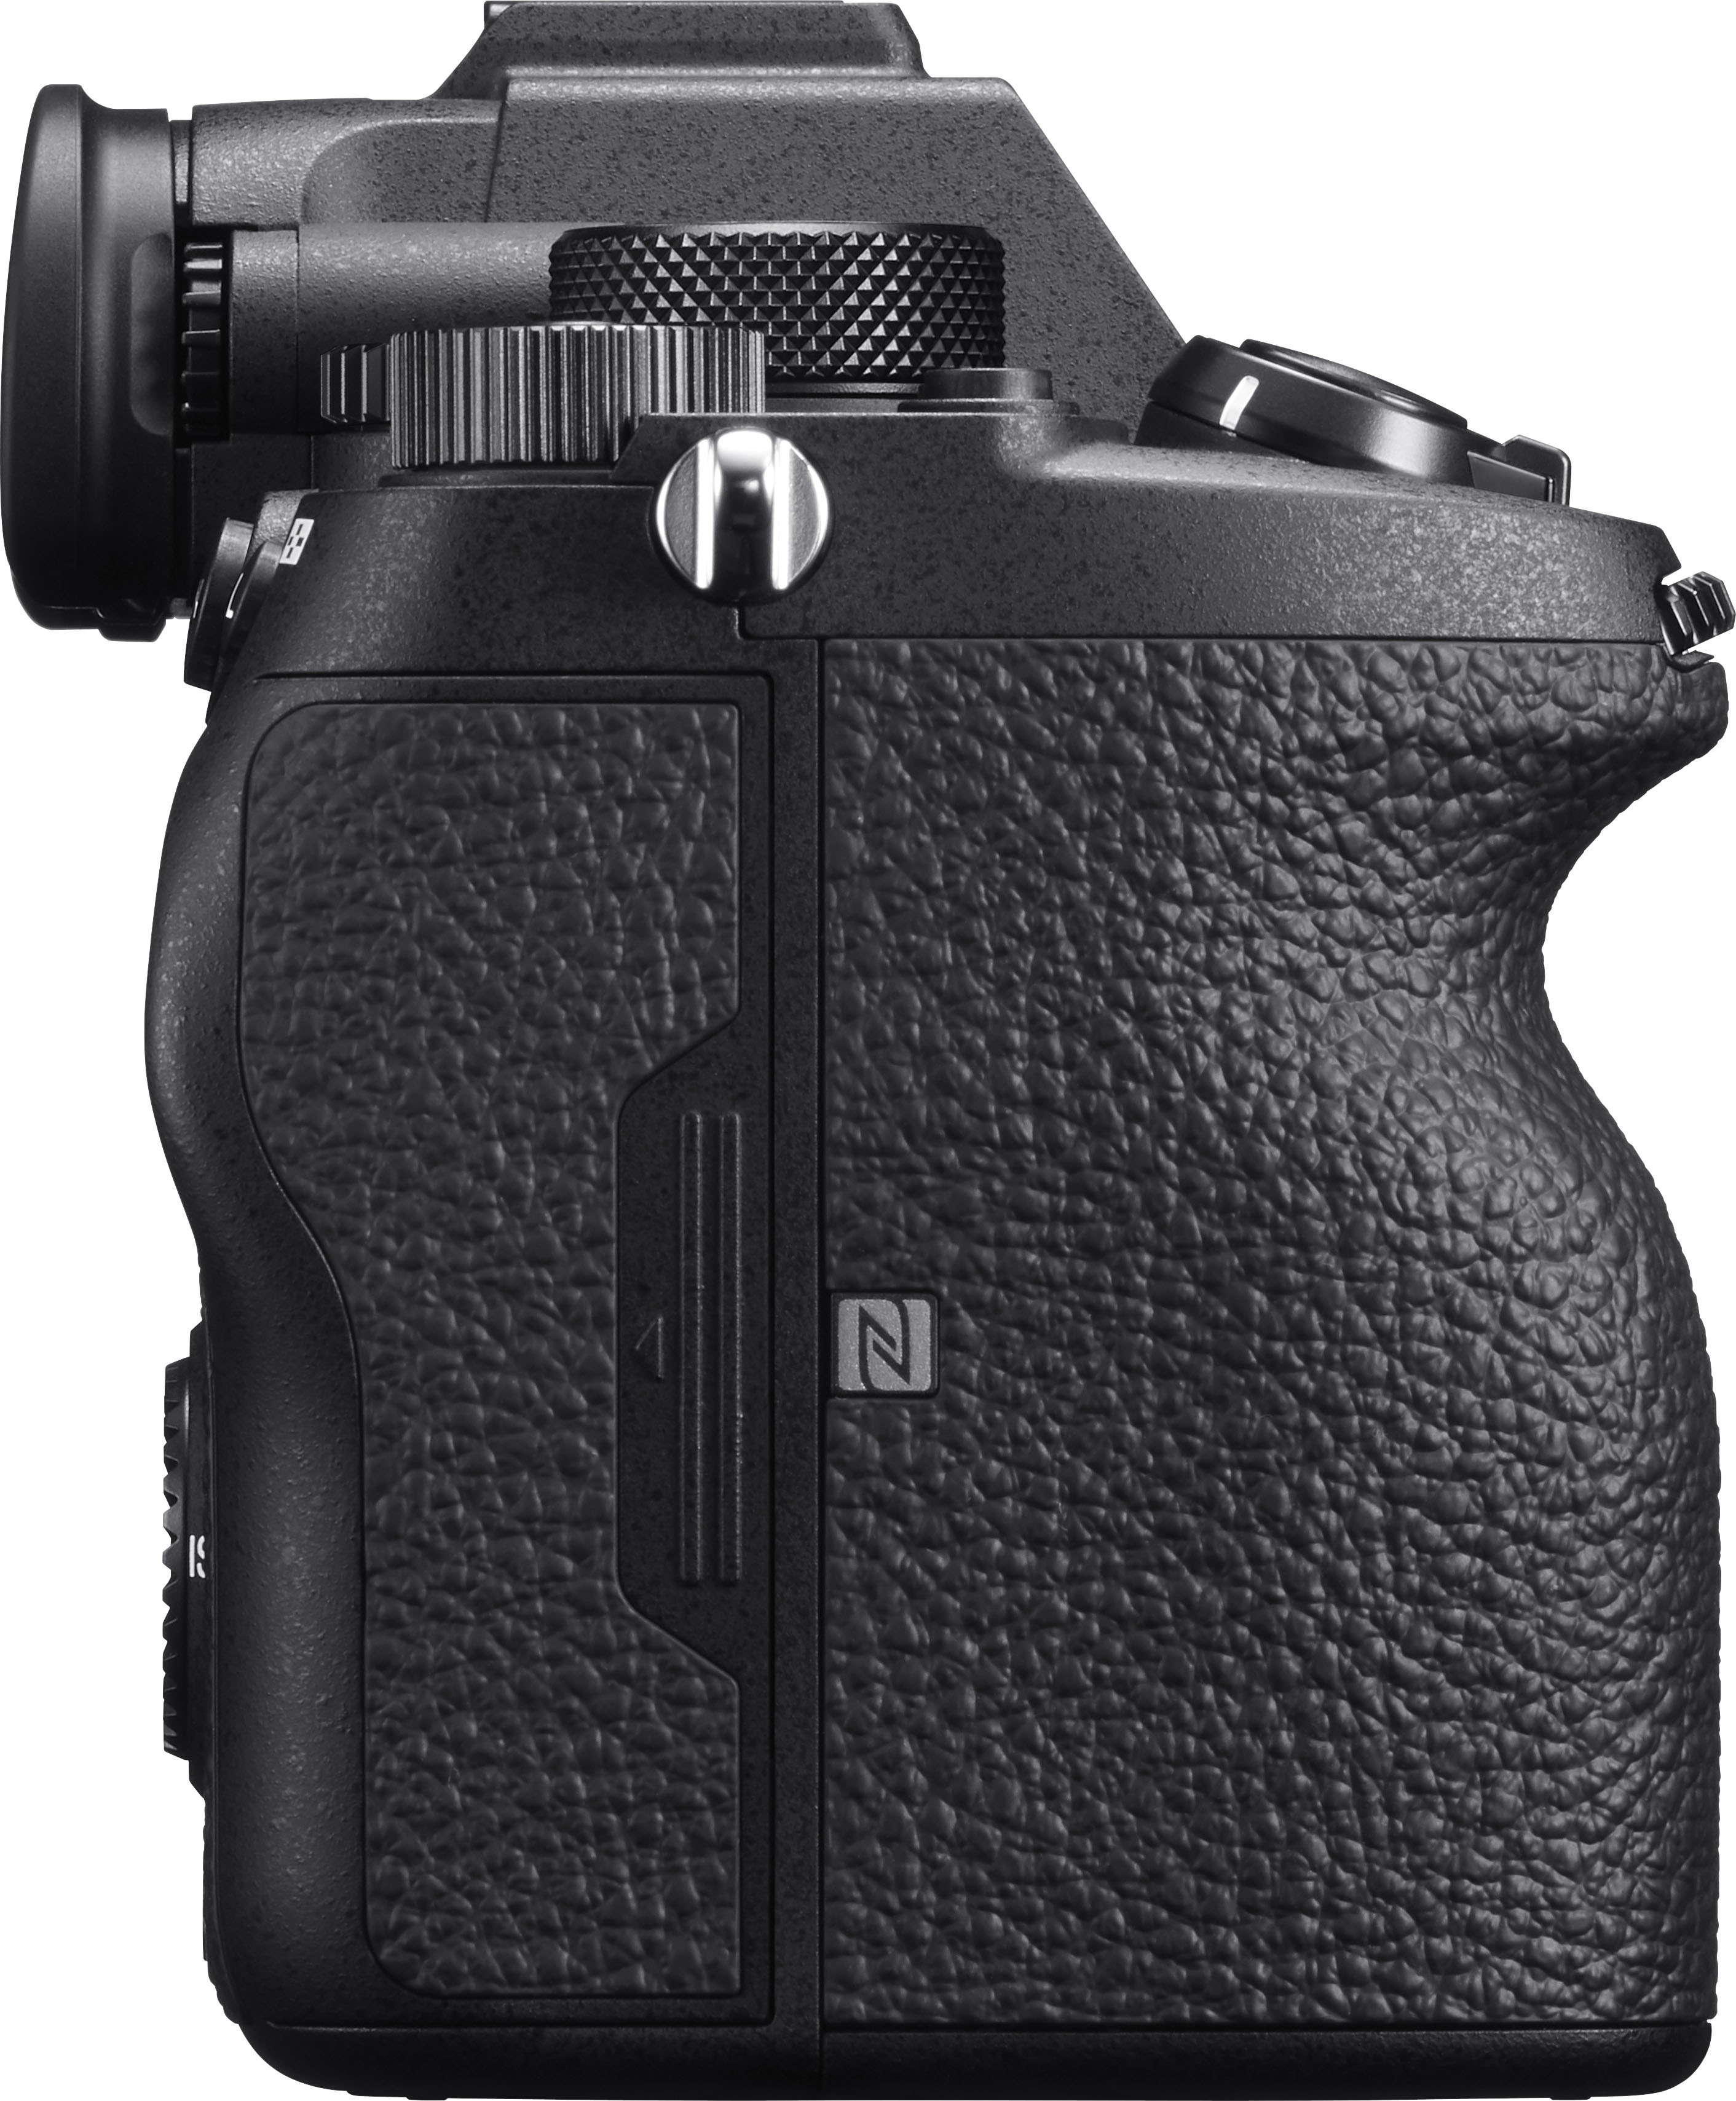 Black Sony Alpha 7R IV Full Frame Mirrorless Interchangeable Lens Camera w/High Resolution 61MP Sensor and Fe 50mm F1.8 Lens